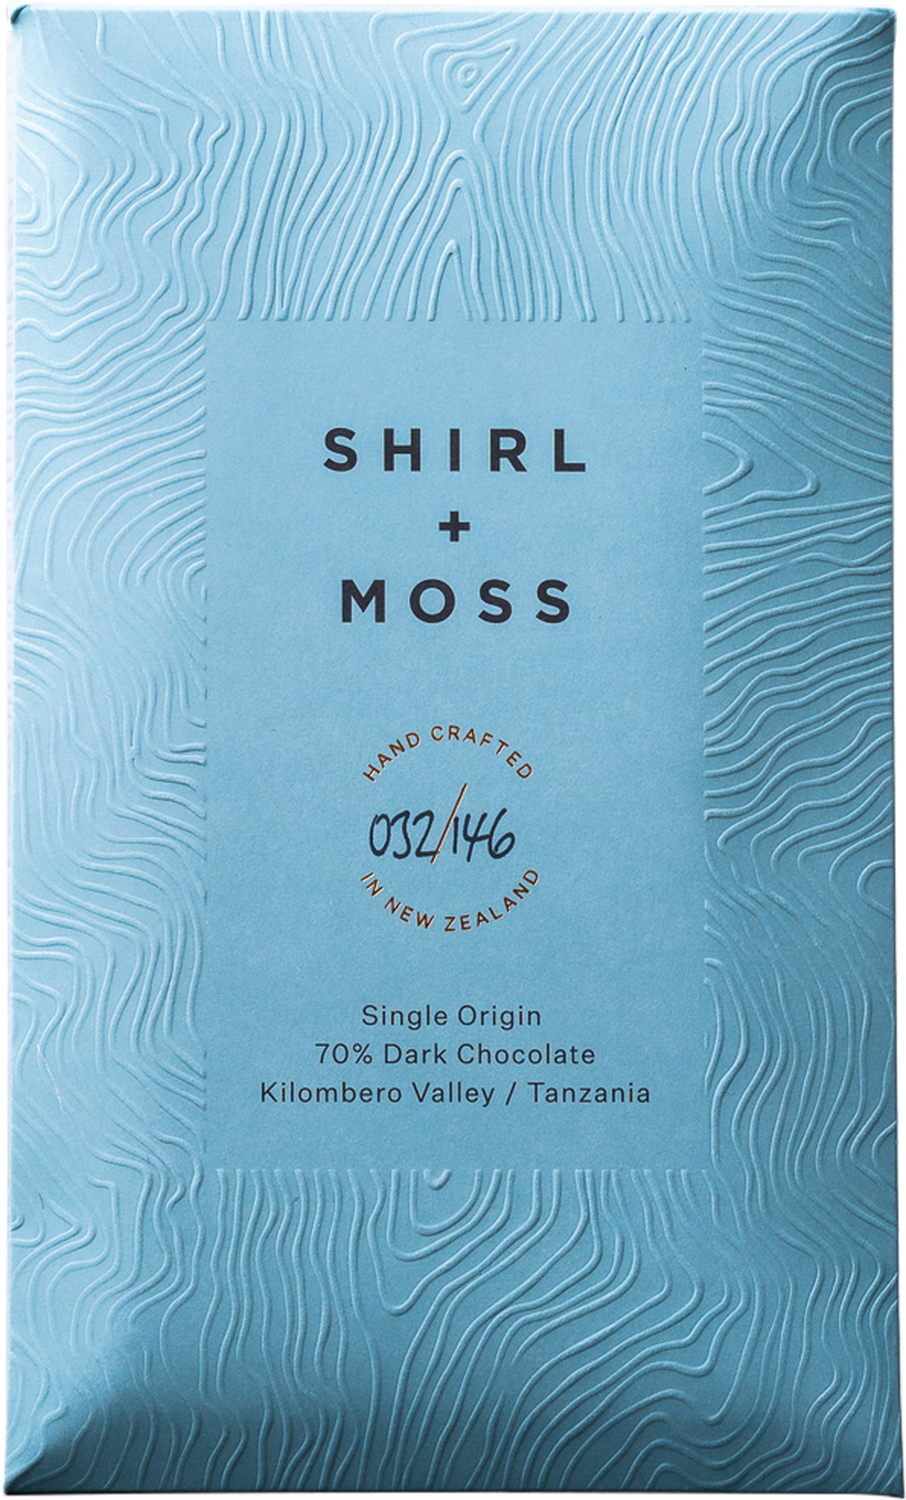 Shirl and Moss - Single Origin Kilombero Valley Tanzania